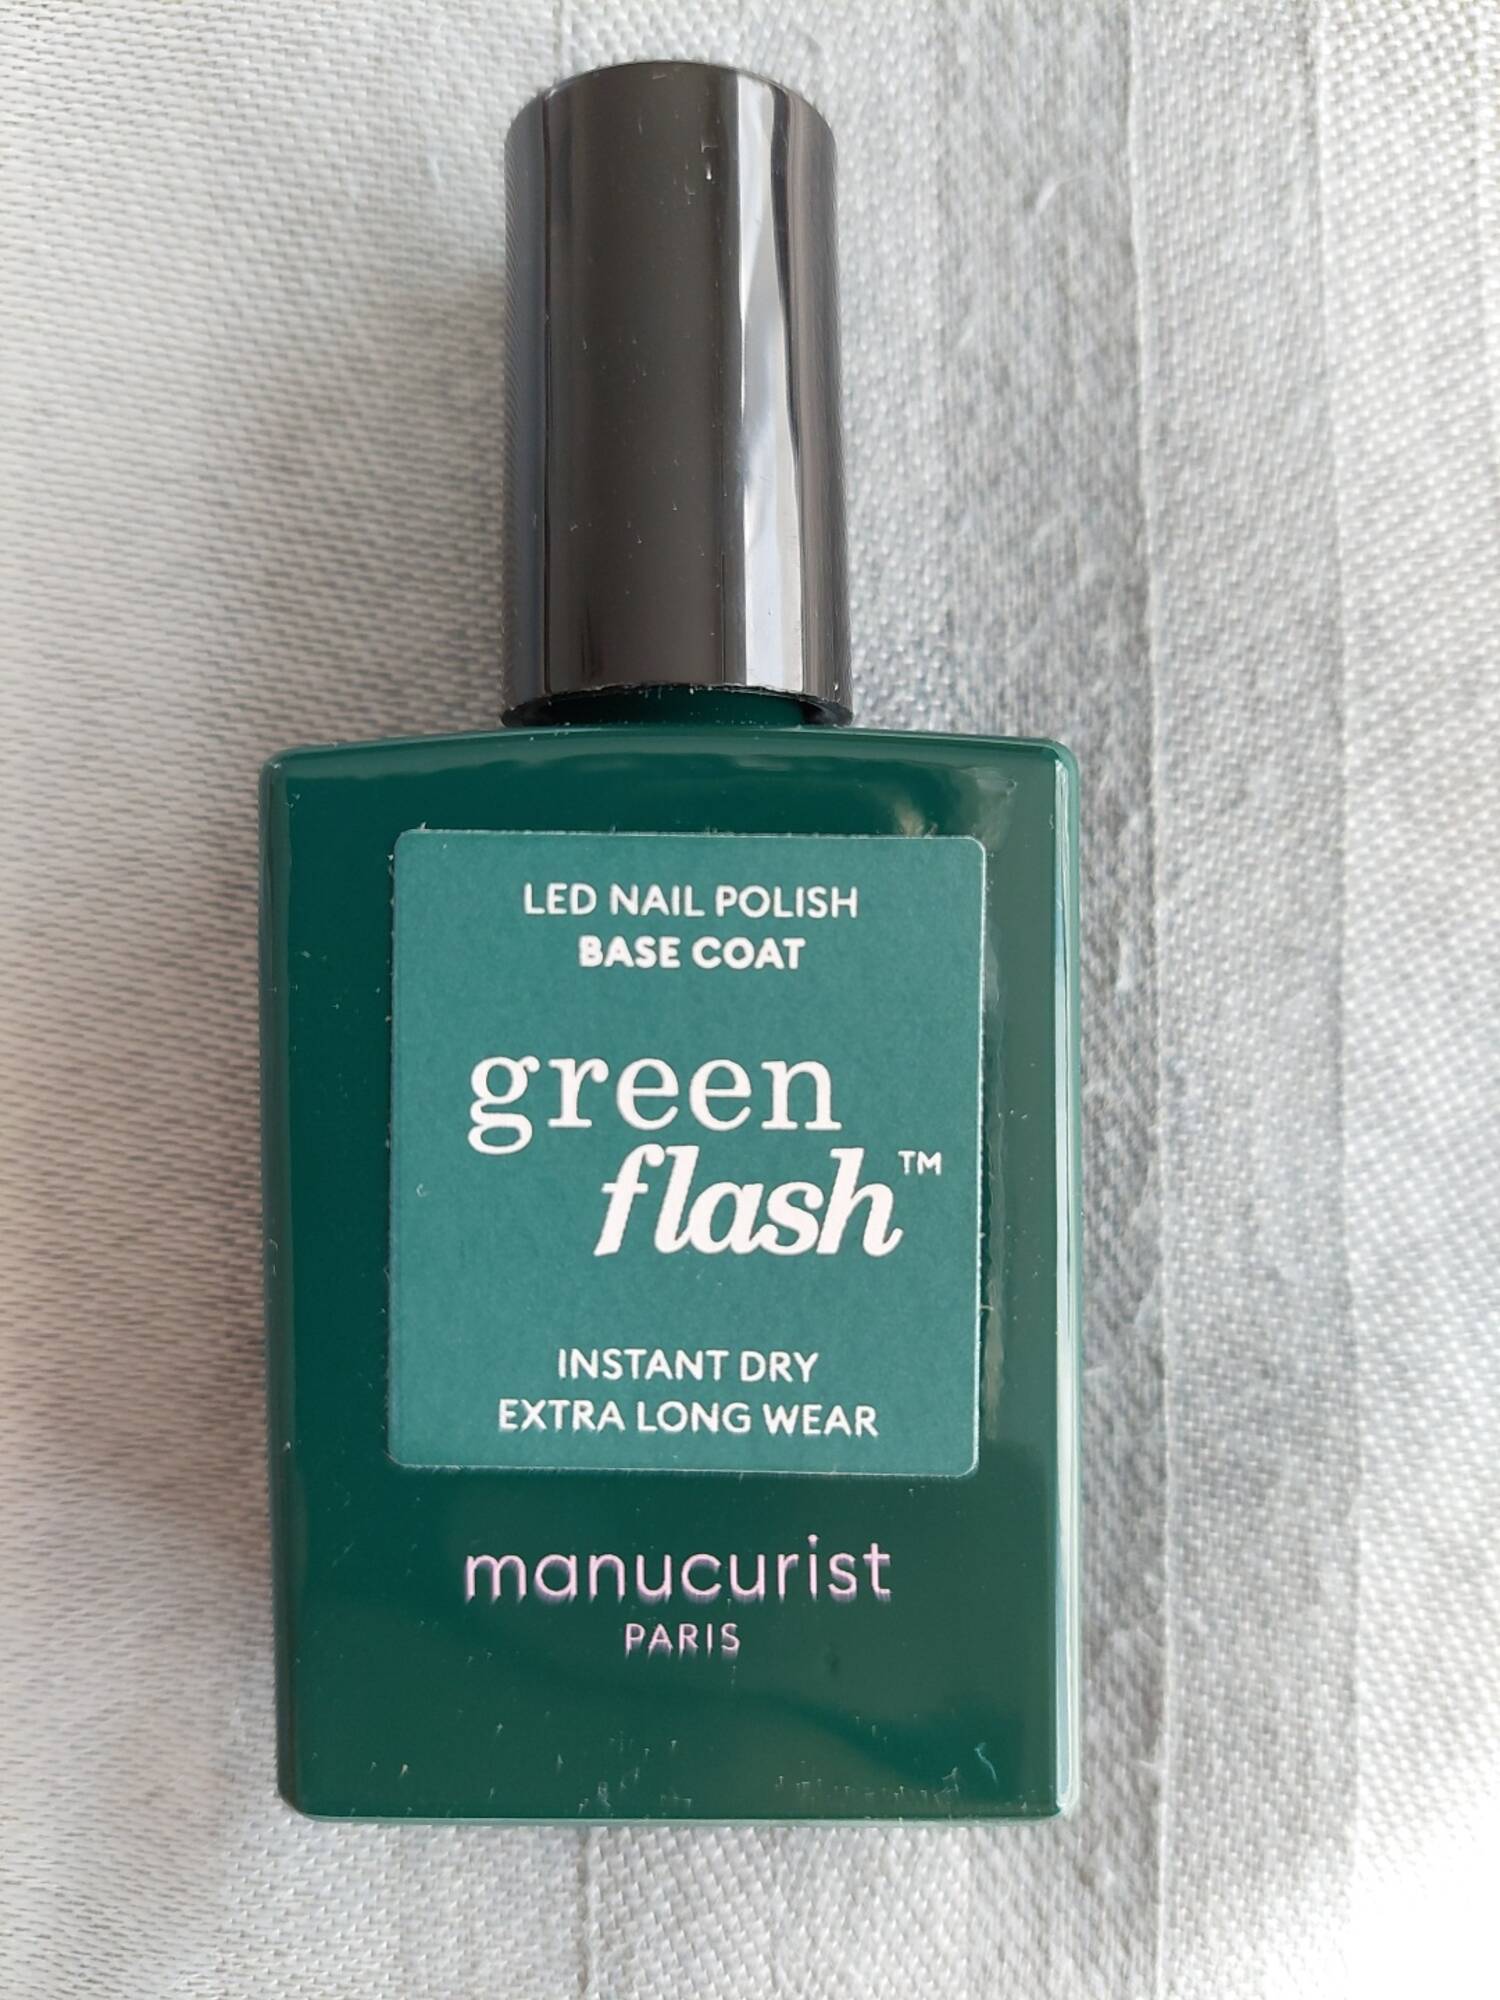 MANUCURIST - Led nail polish - Green flash base coat